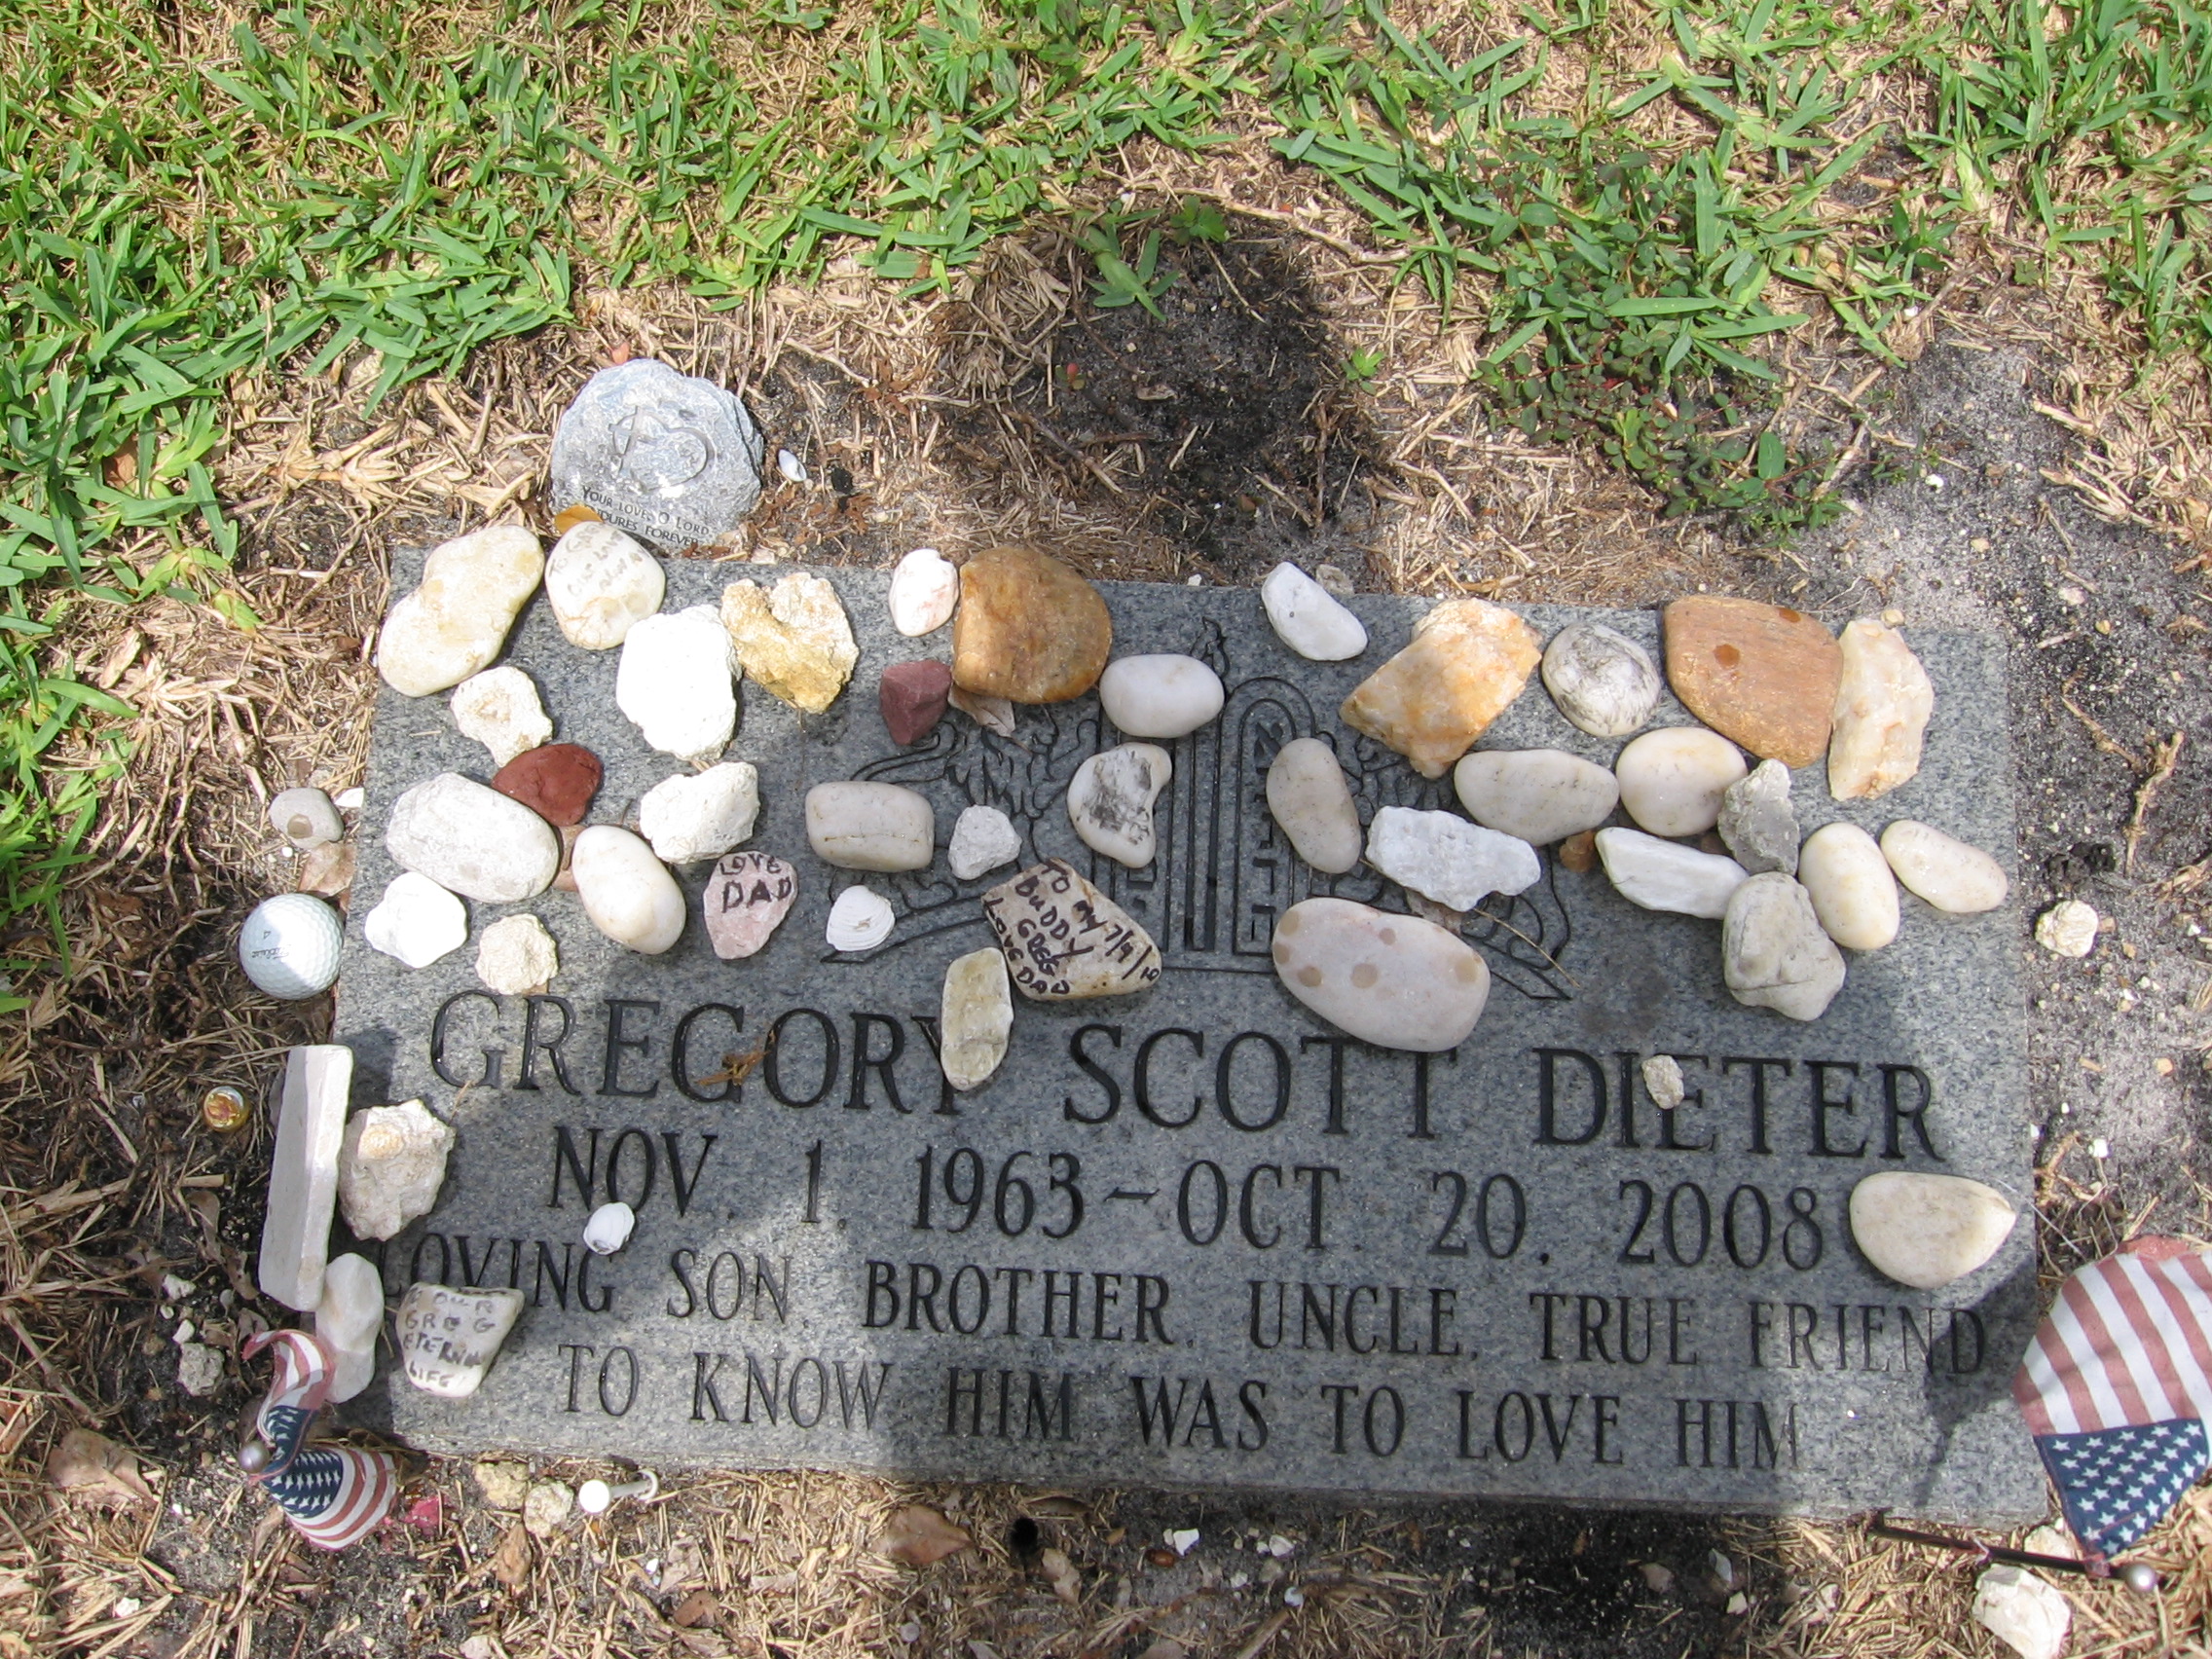 Gregory Scott Dieter